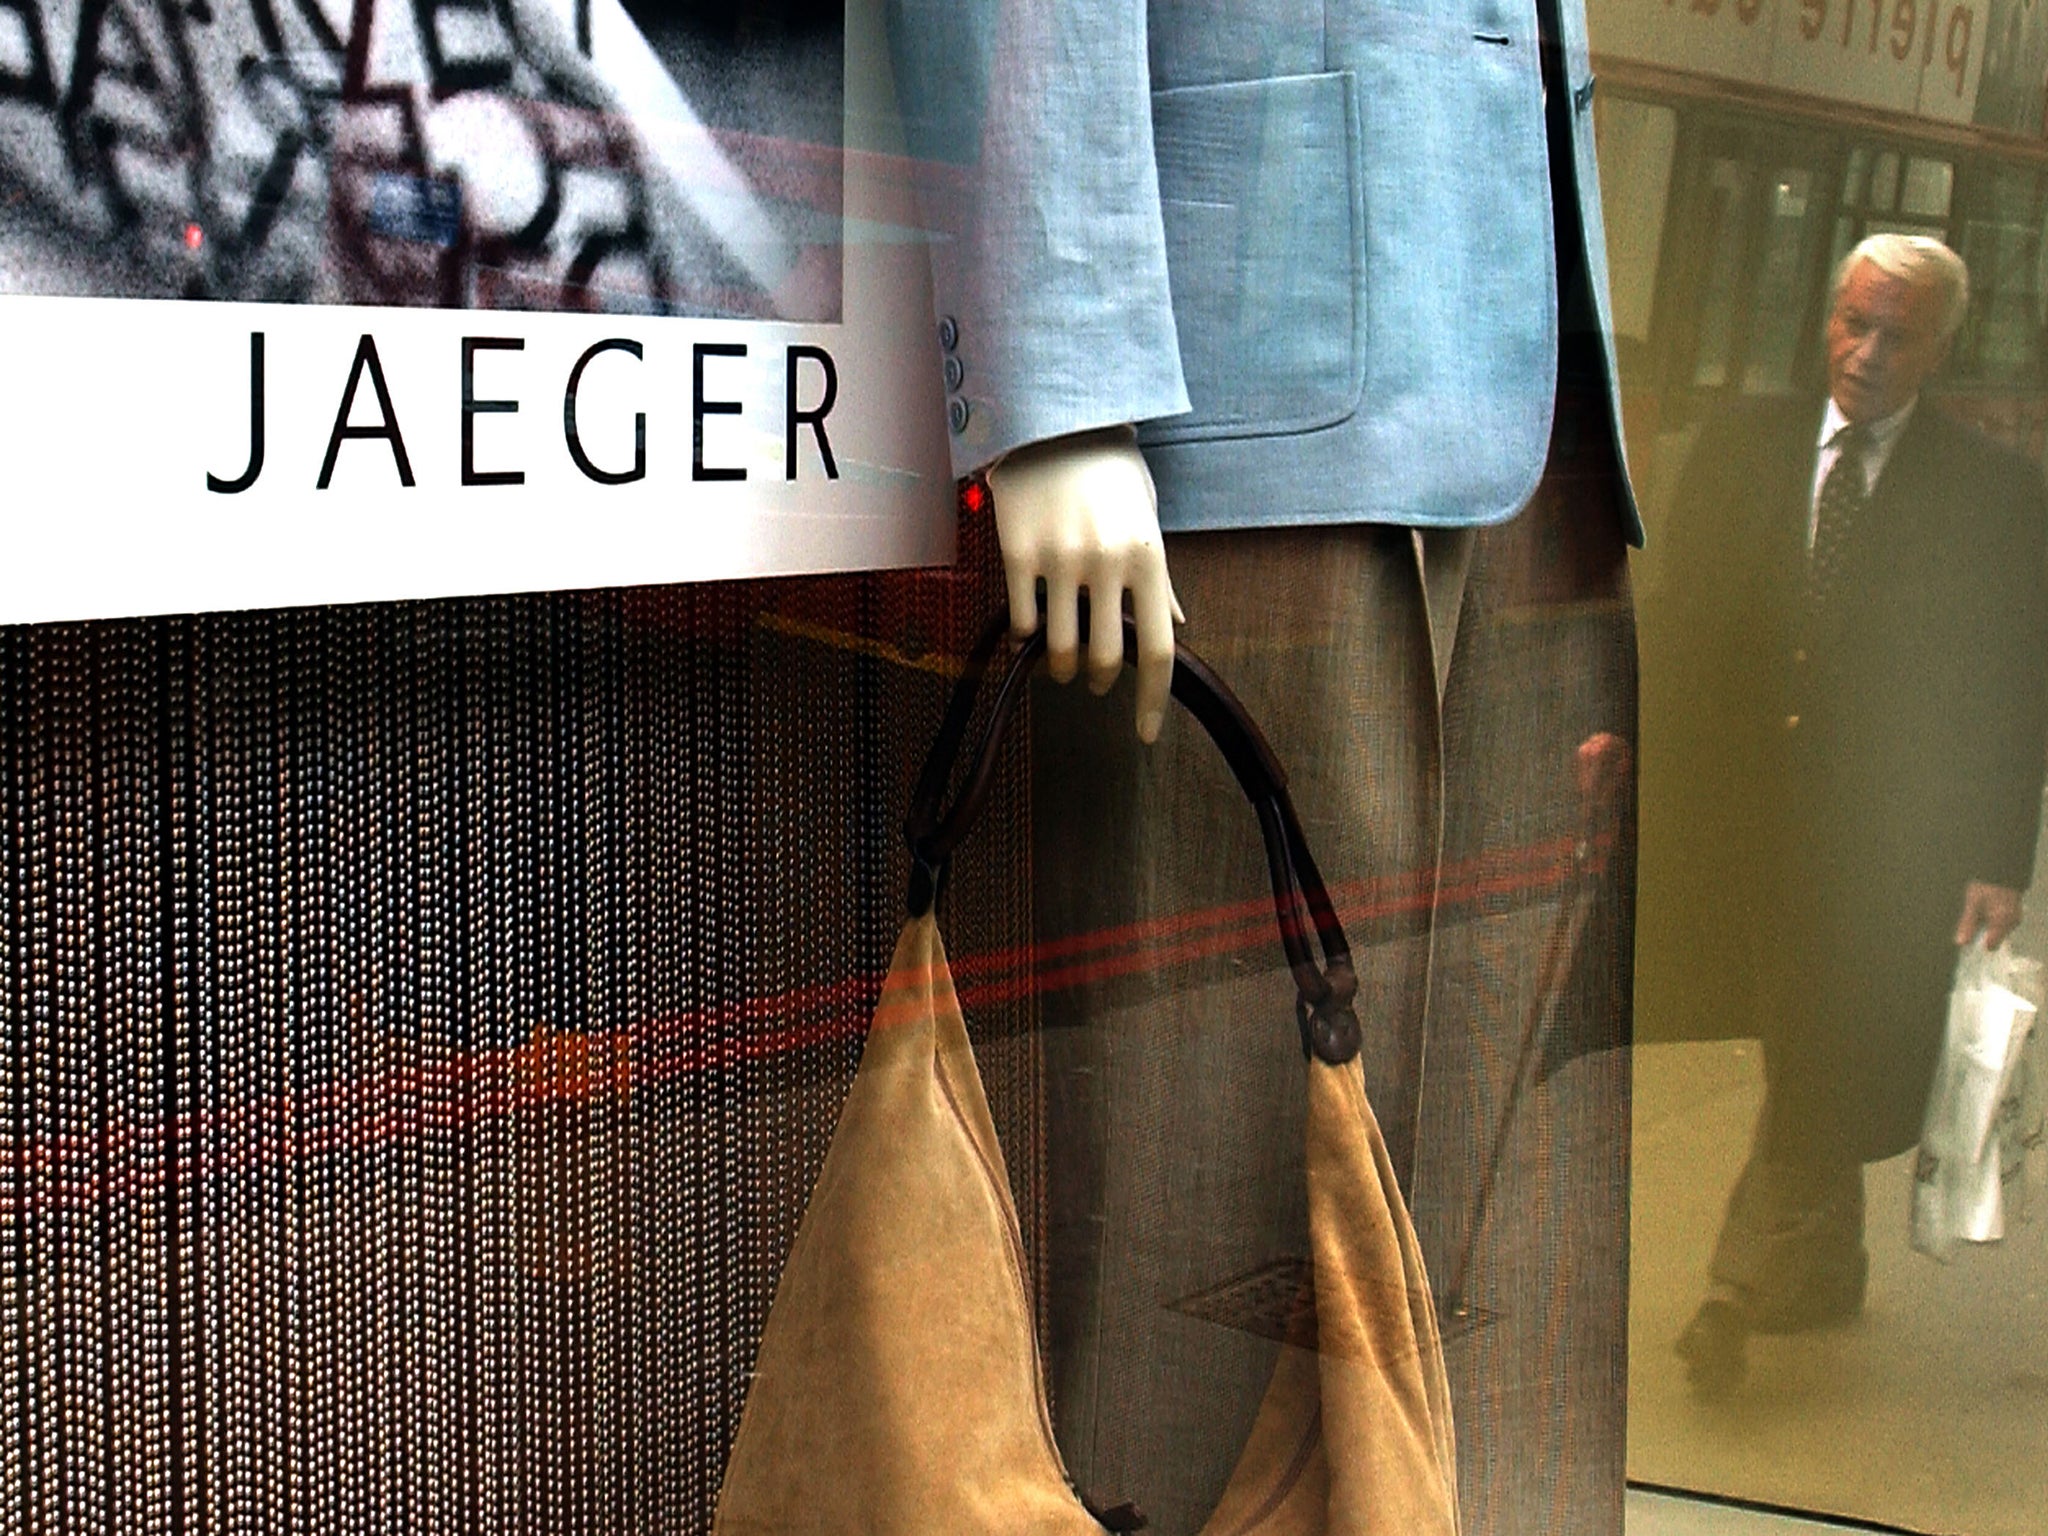 Jaeger stores face an uncertain future